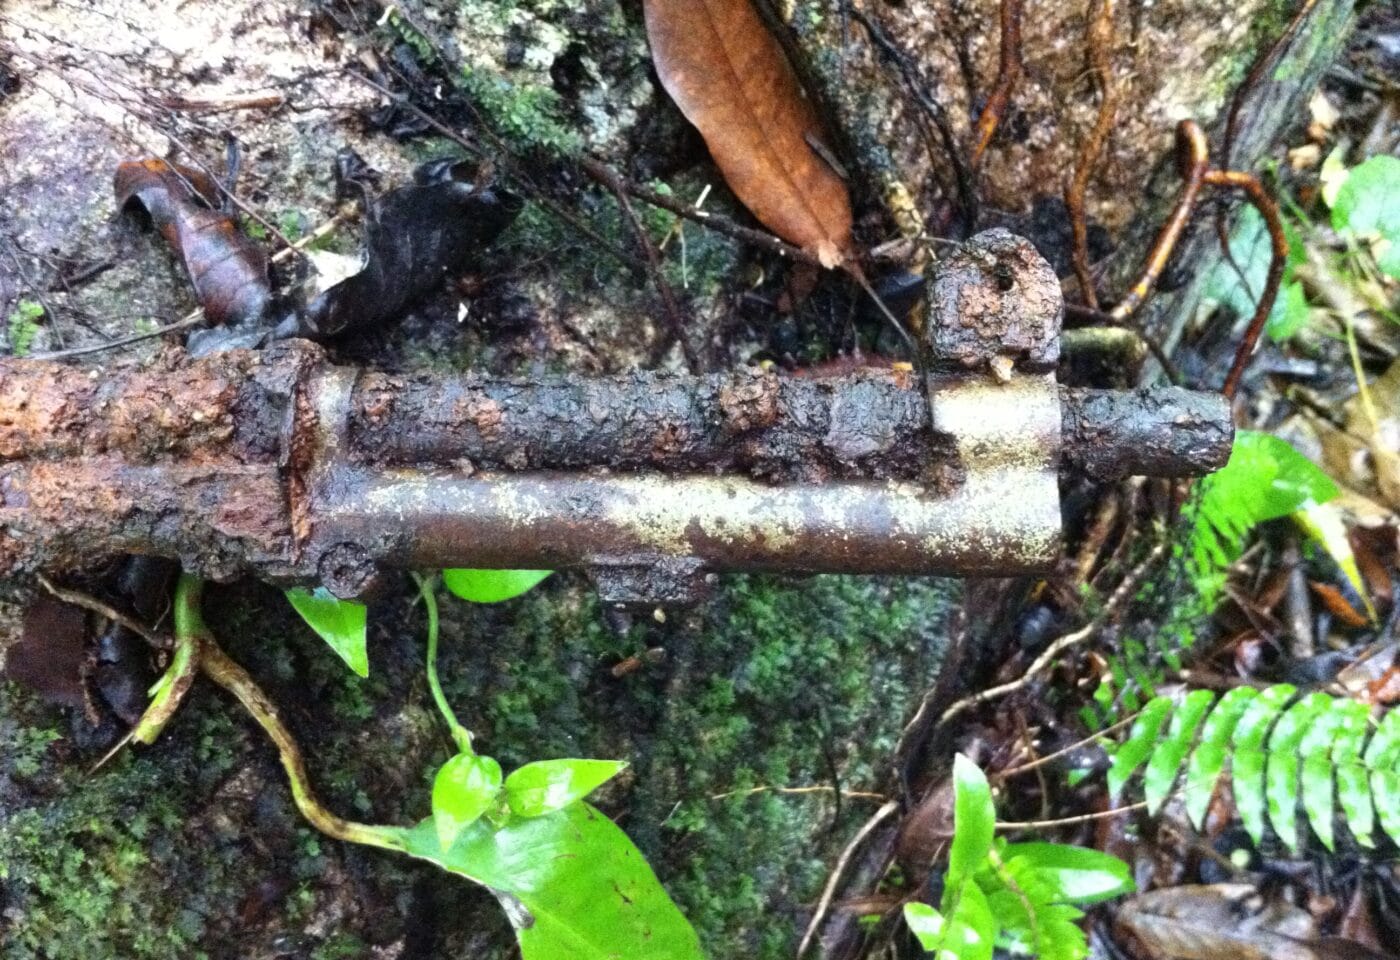 M1 Garand found on Peleliu